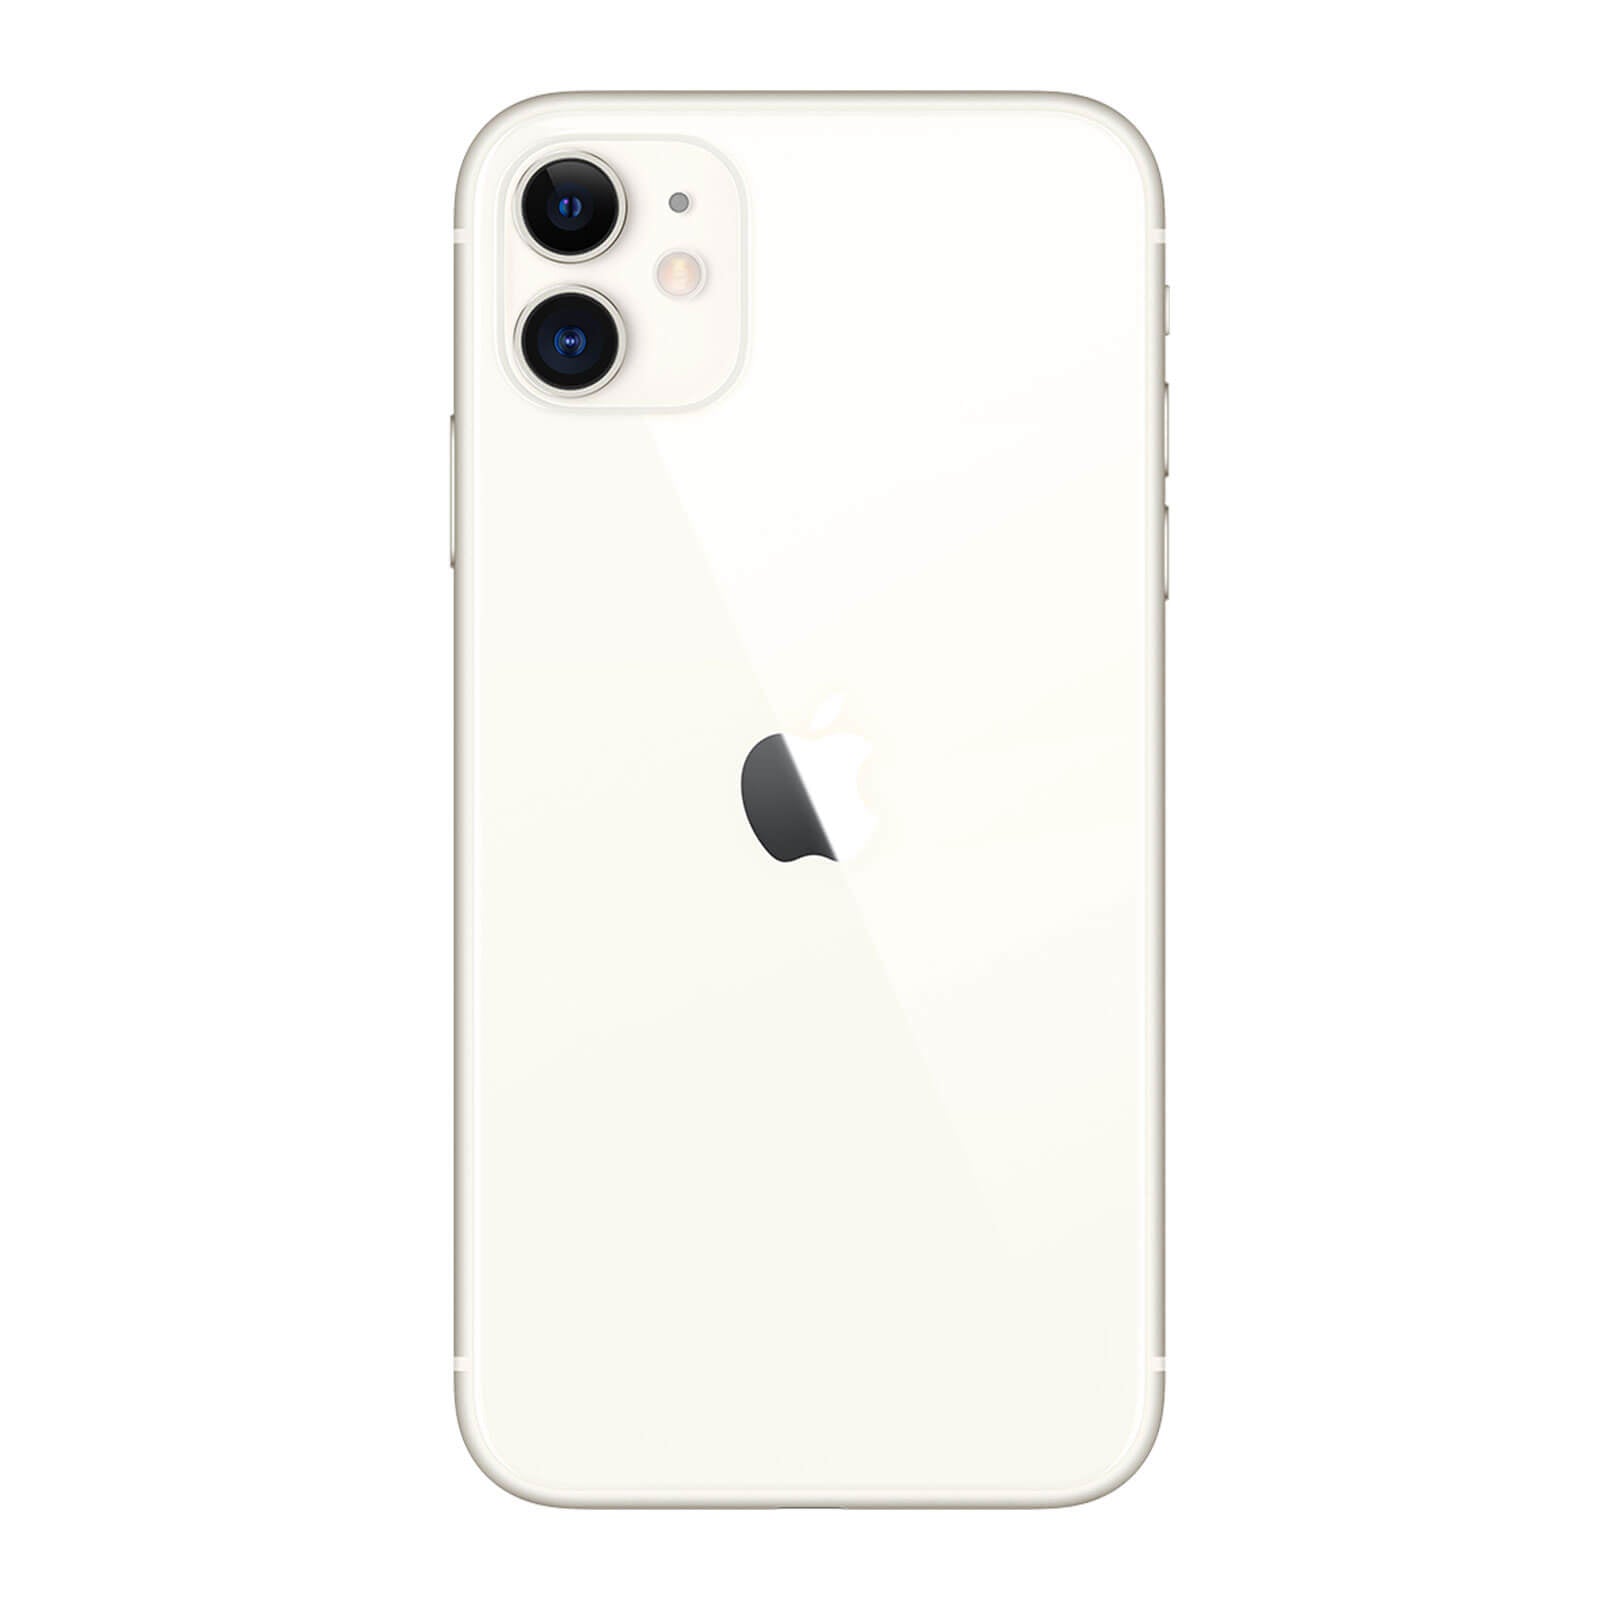 Apple iPhone 11 256GB White Good - Unlocked